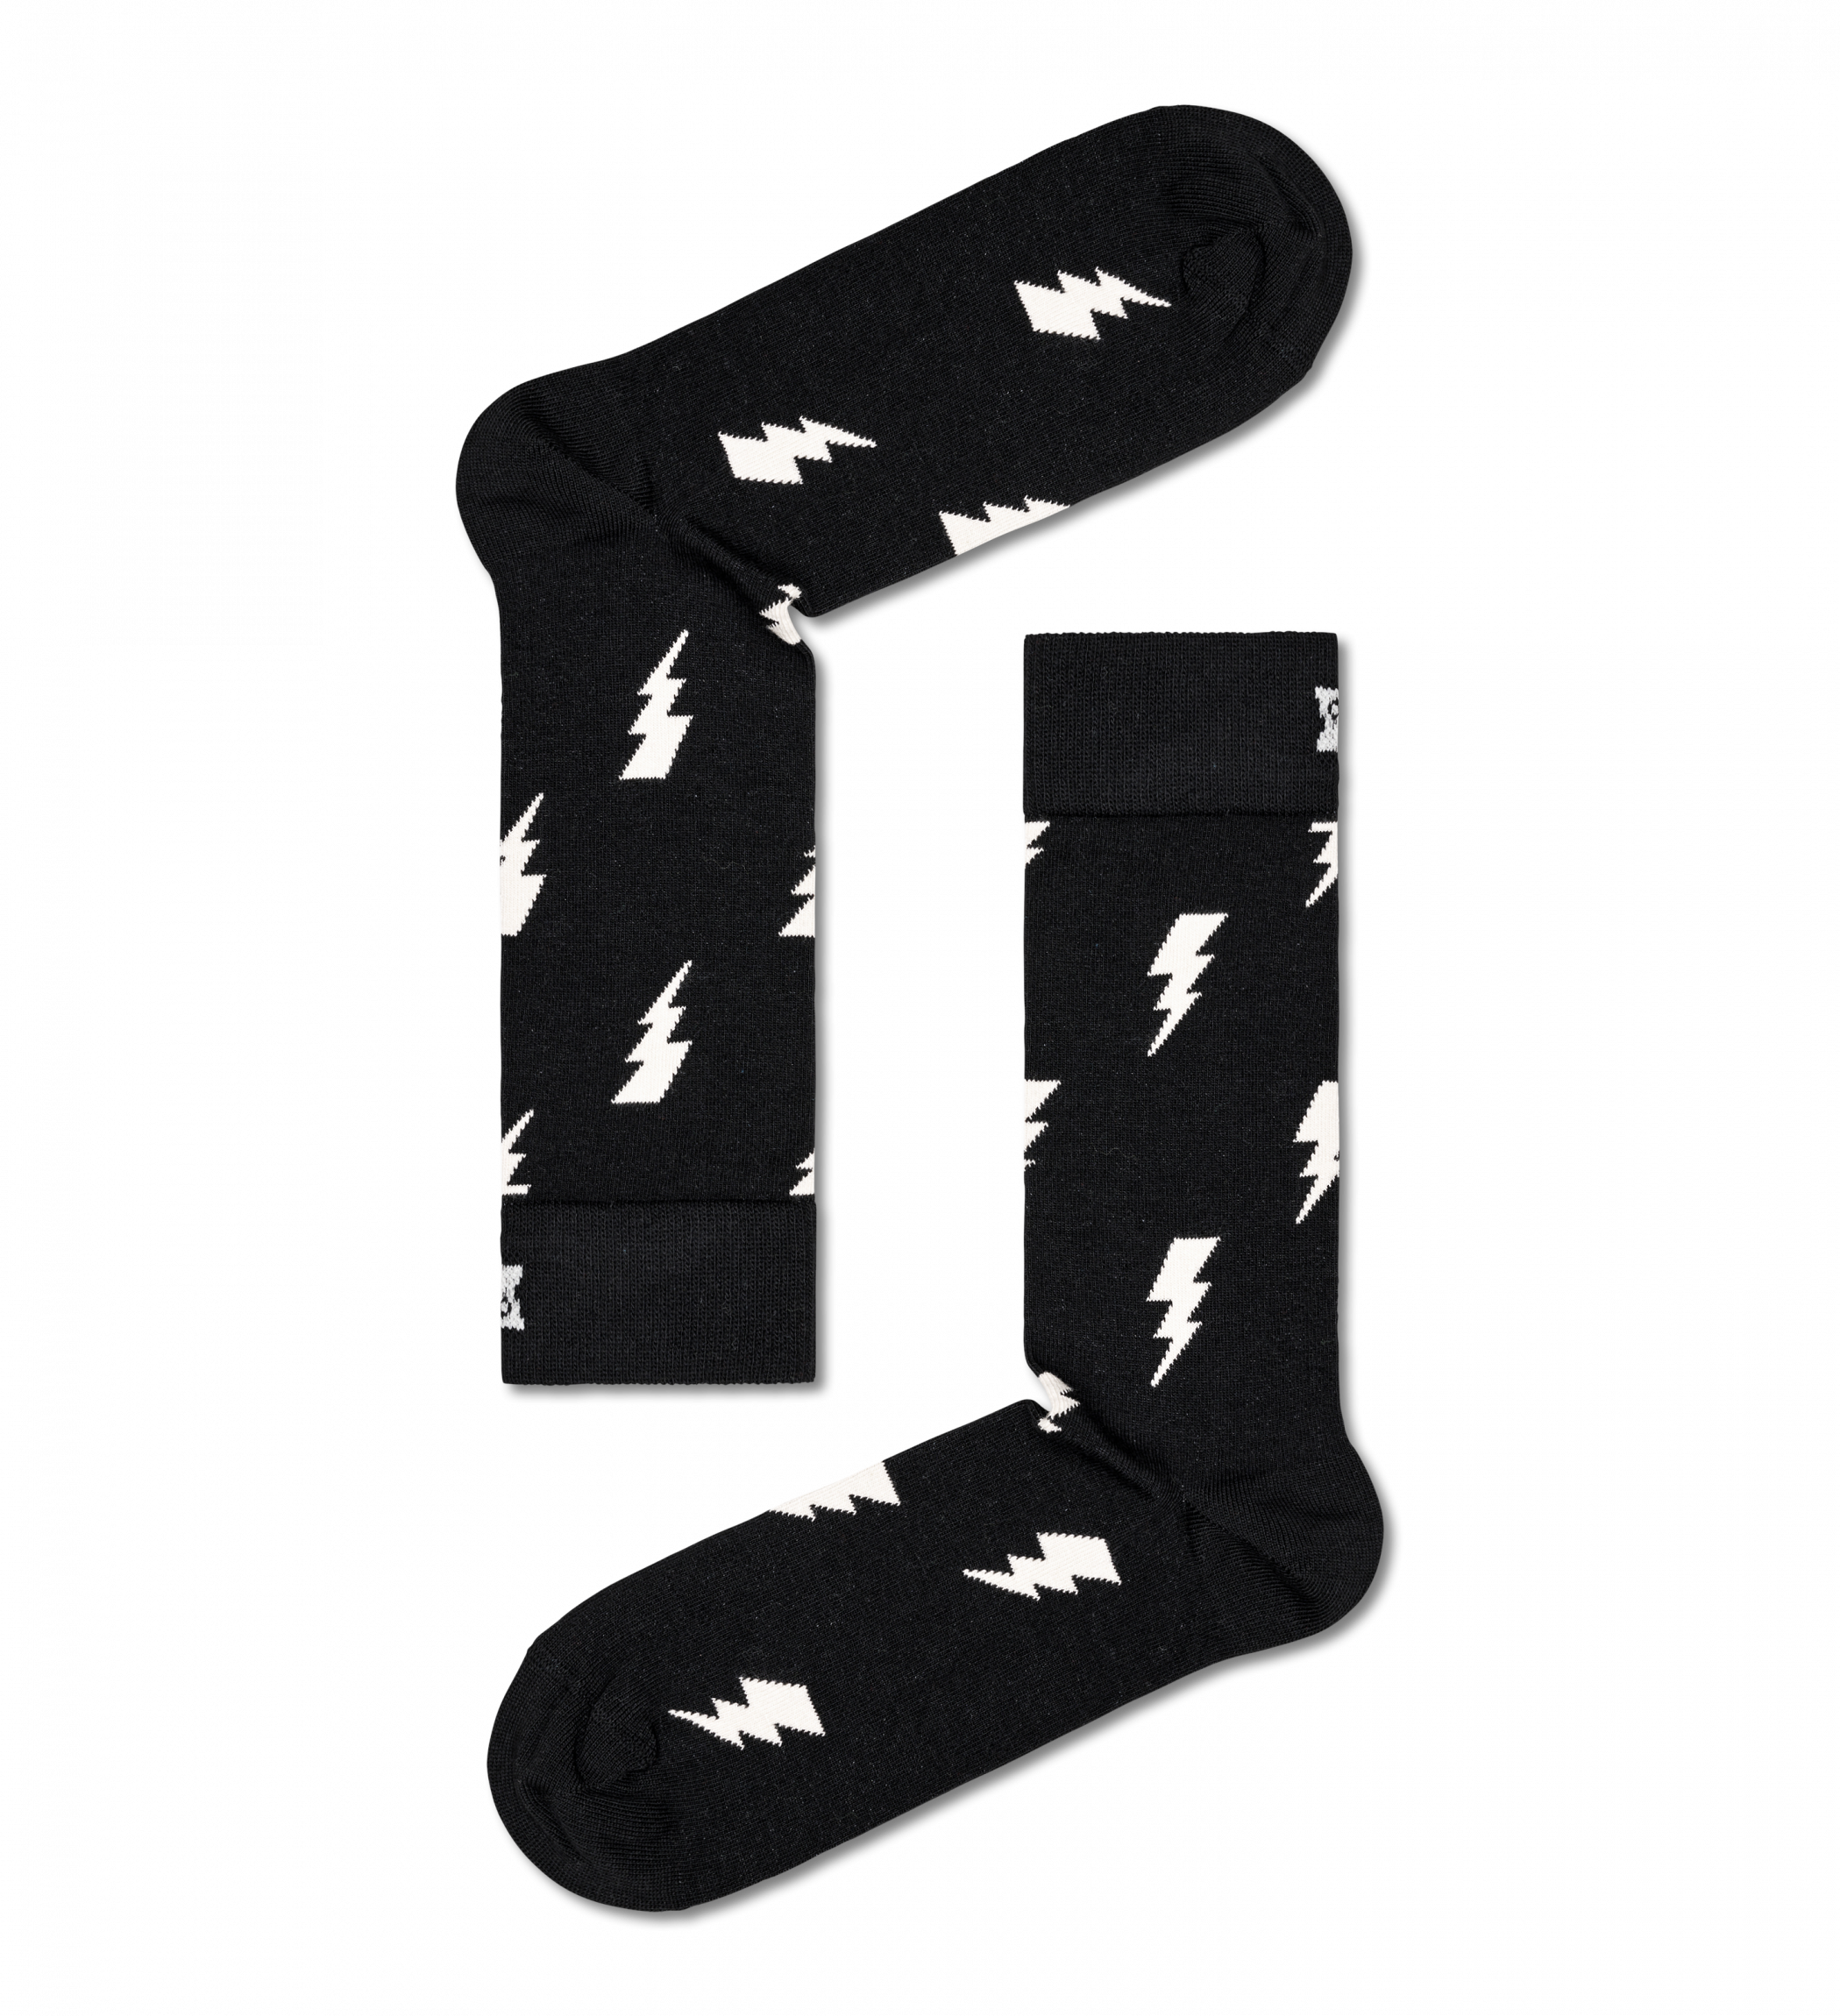 Černé ponožky Happy Socks s blesky, vzor Flash